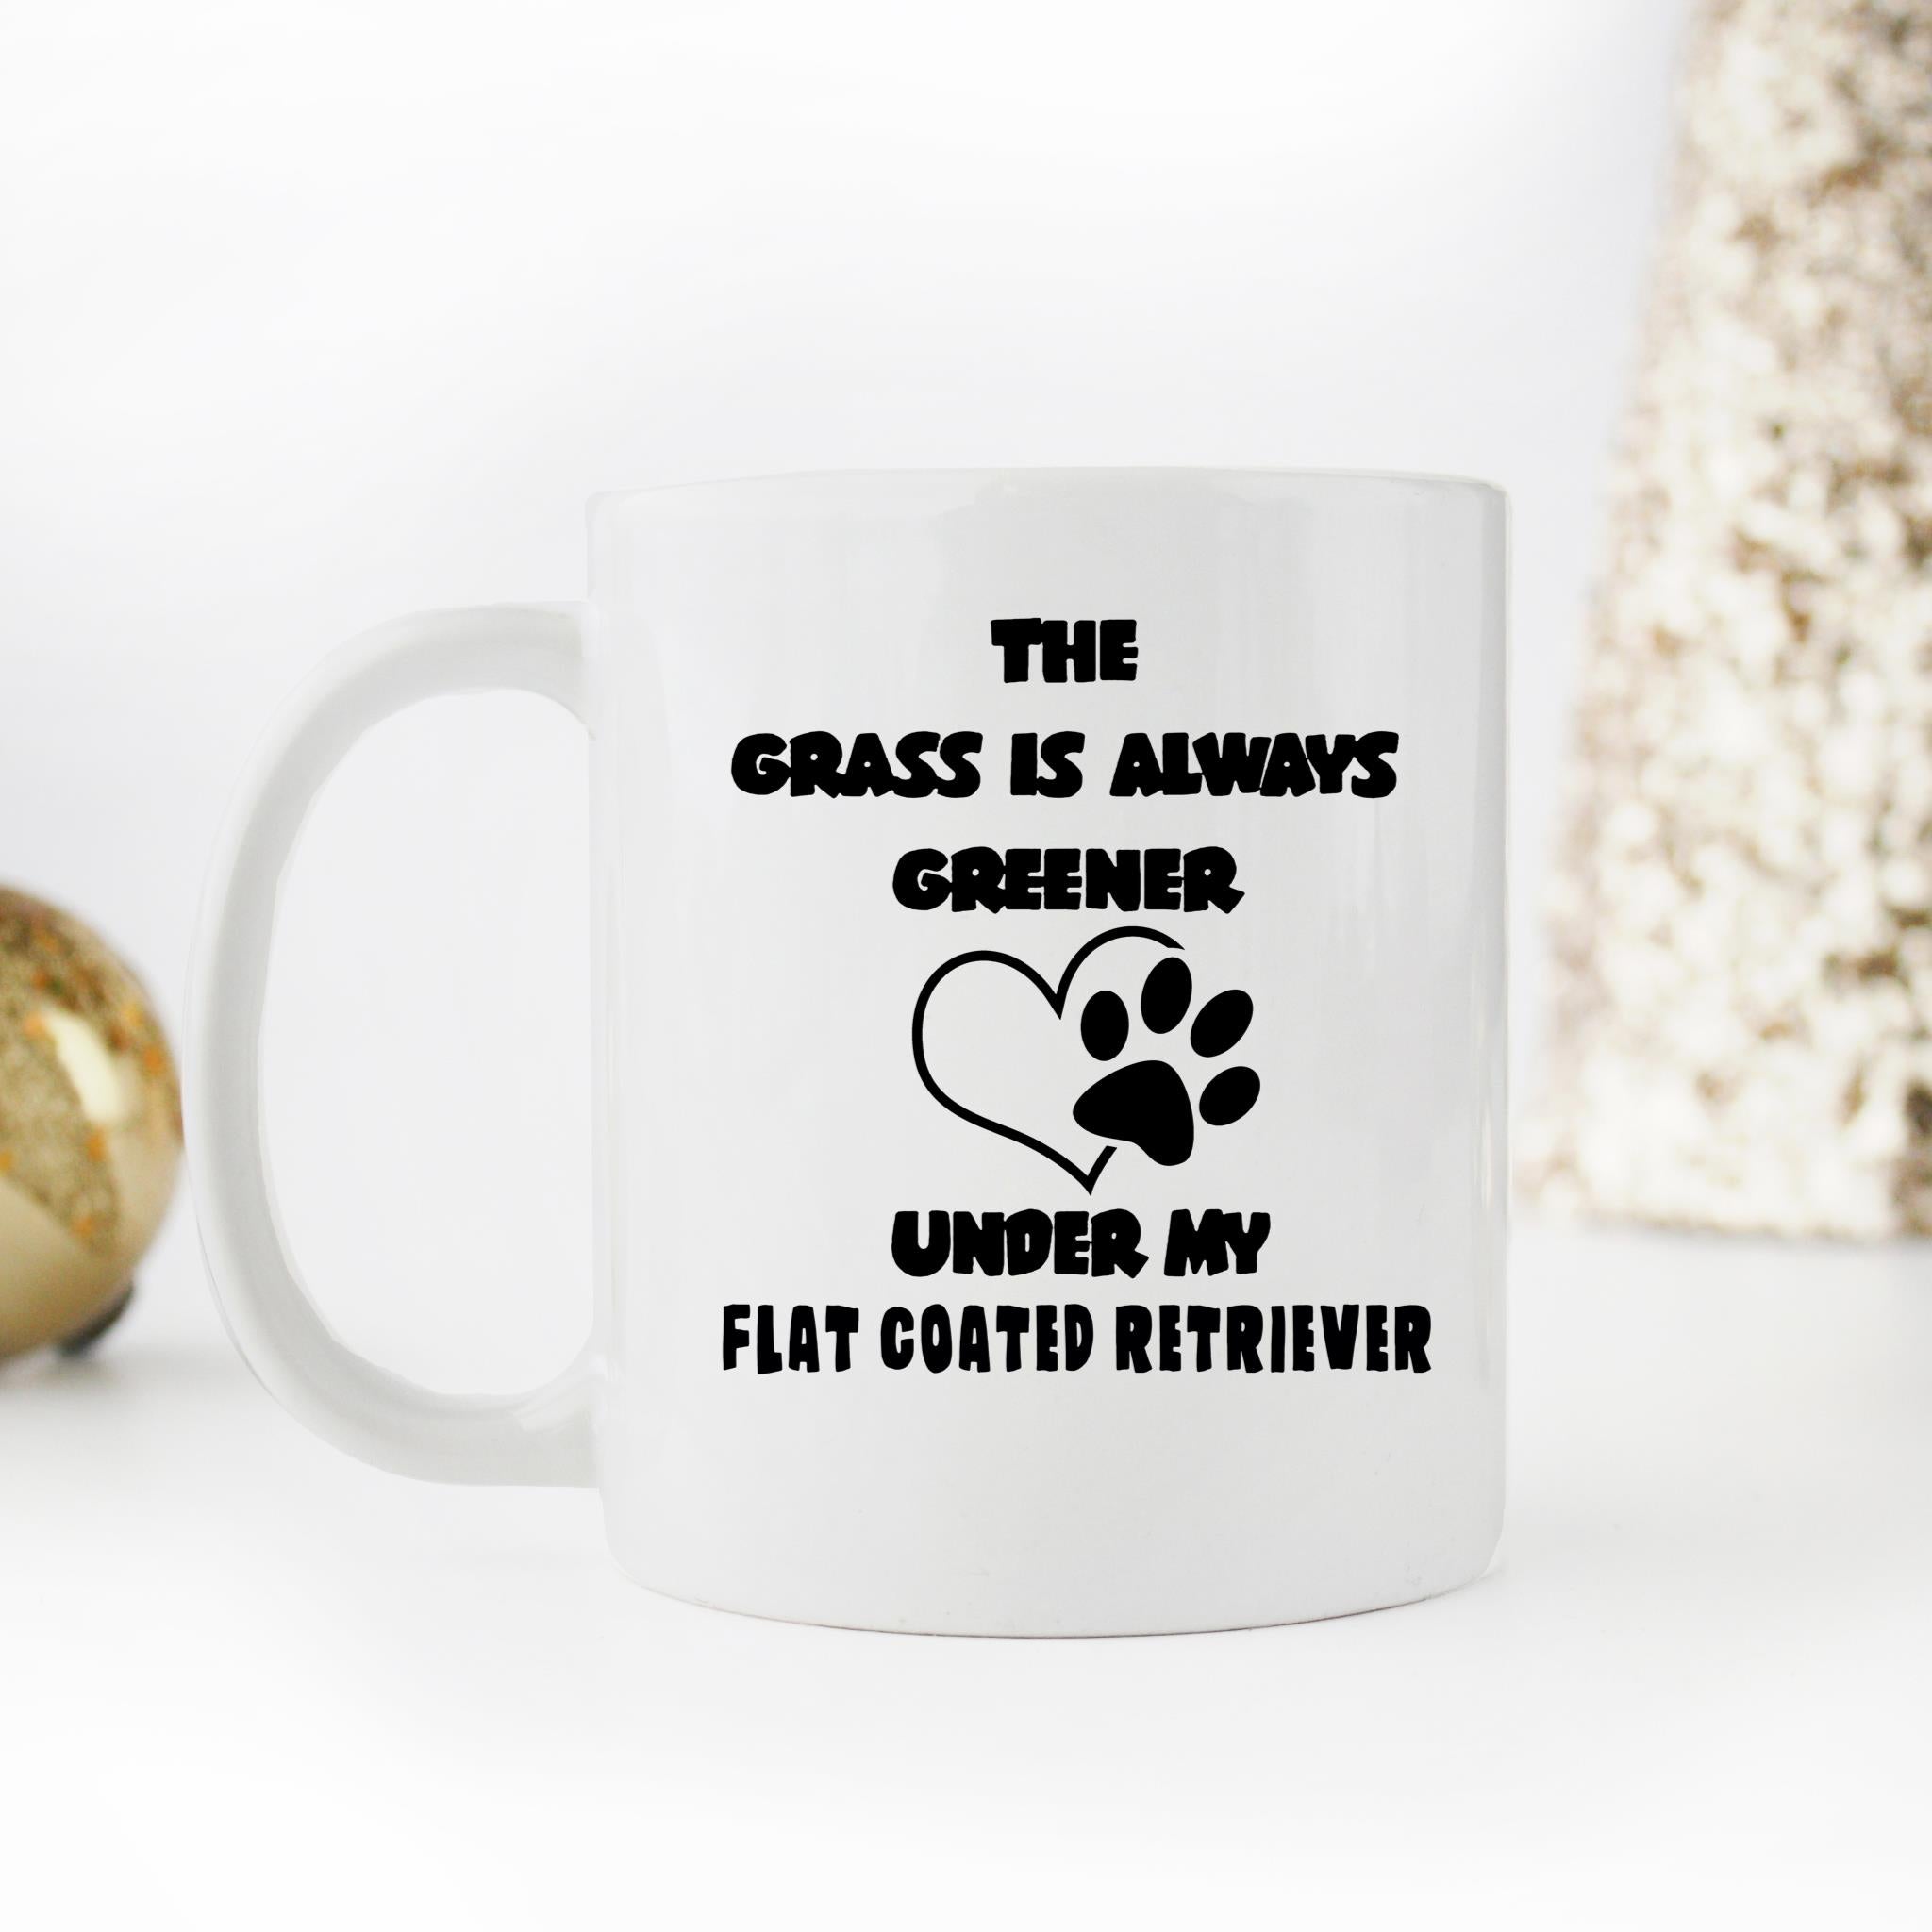 Skitons Funny Ceramic Novelty Coffee Mug The Grass Is Always Greener Under My Flat Coated Retriever Dog Funny Sarcastic, Dog Lover g8wpOnw